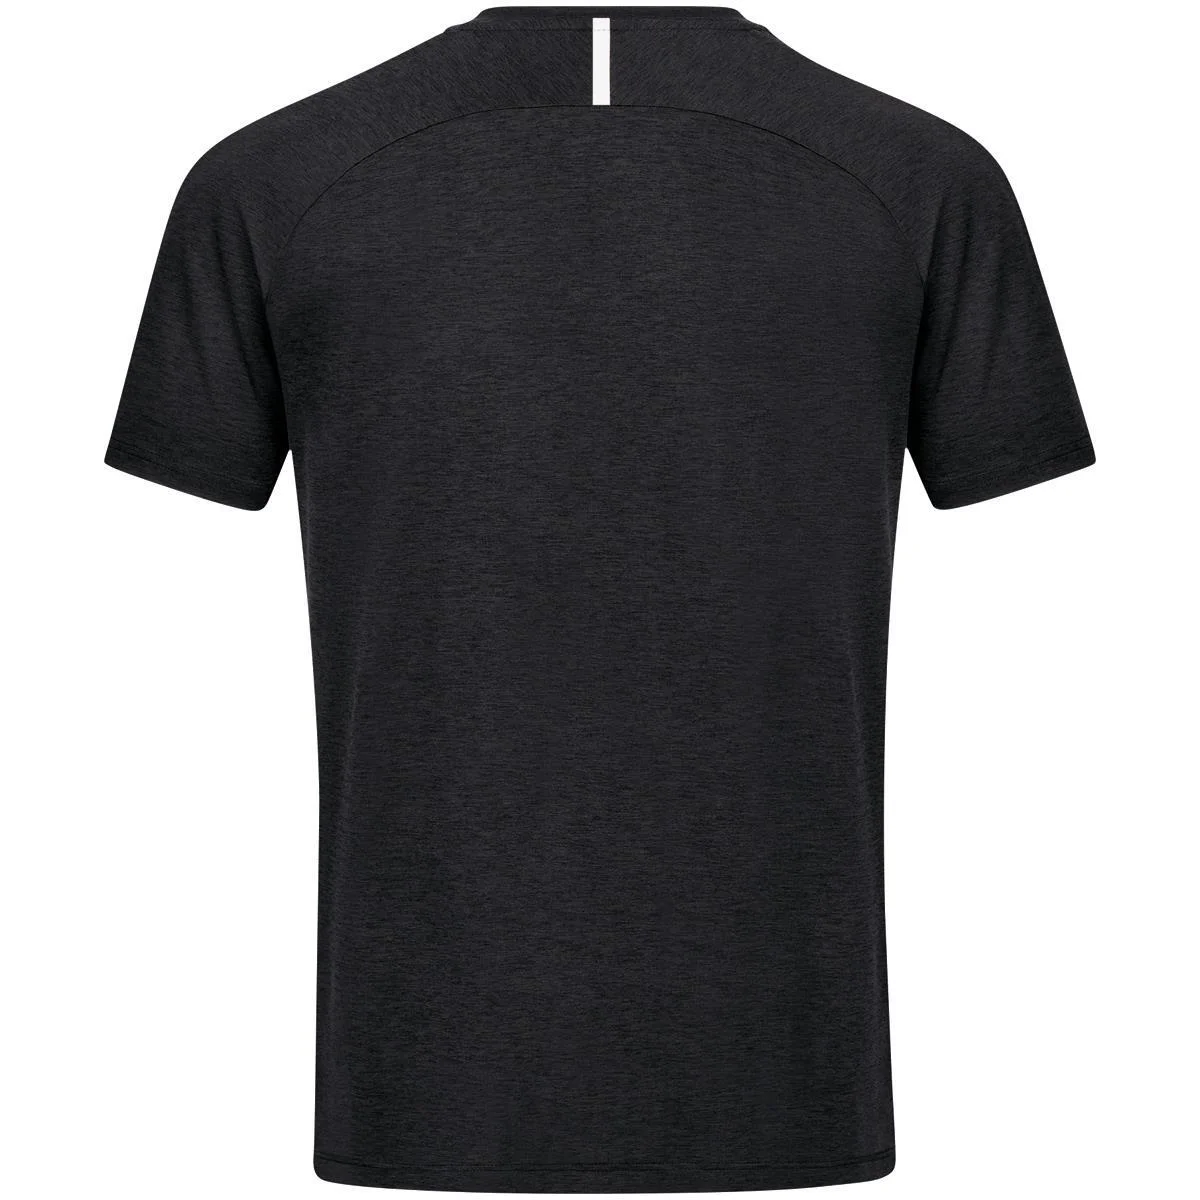 JAKO Herren T-Shirt Challenge, schwarz meliert/weiß, Gr.S